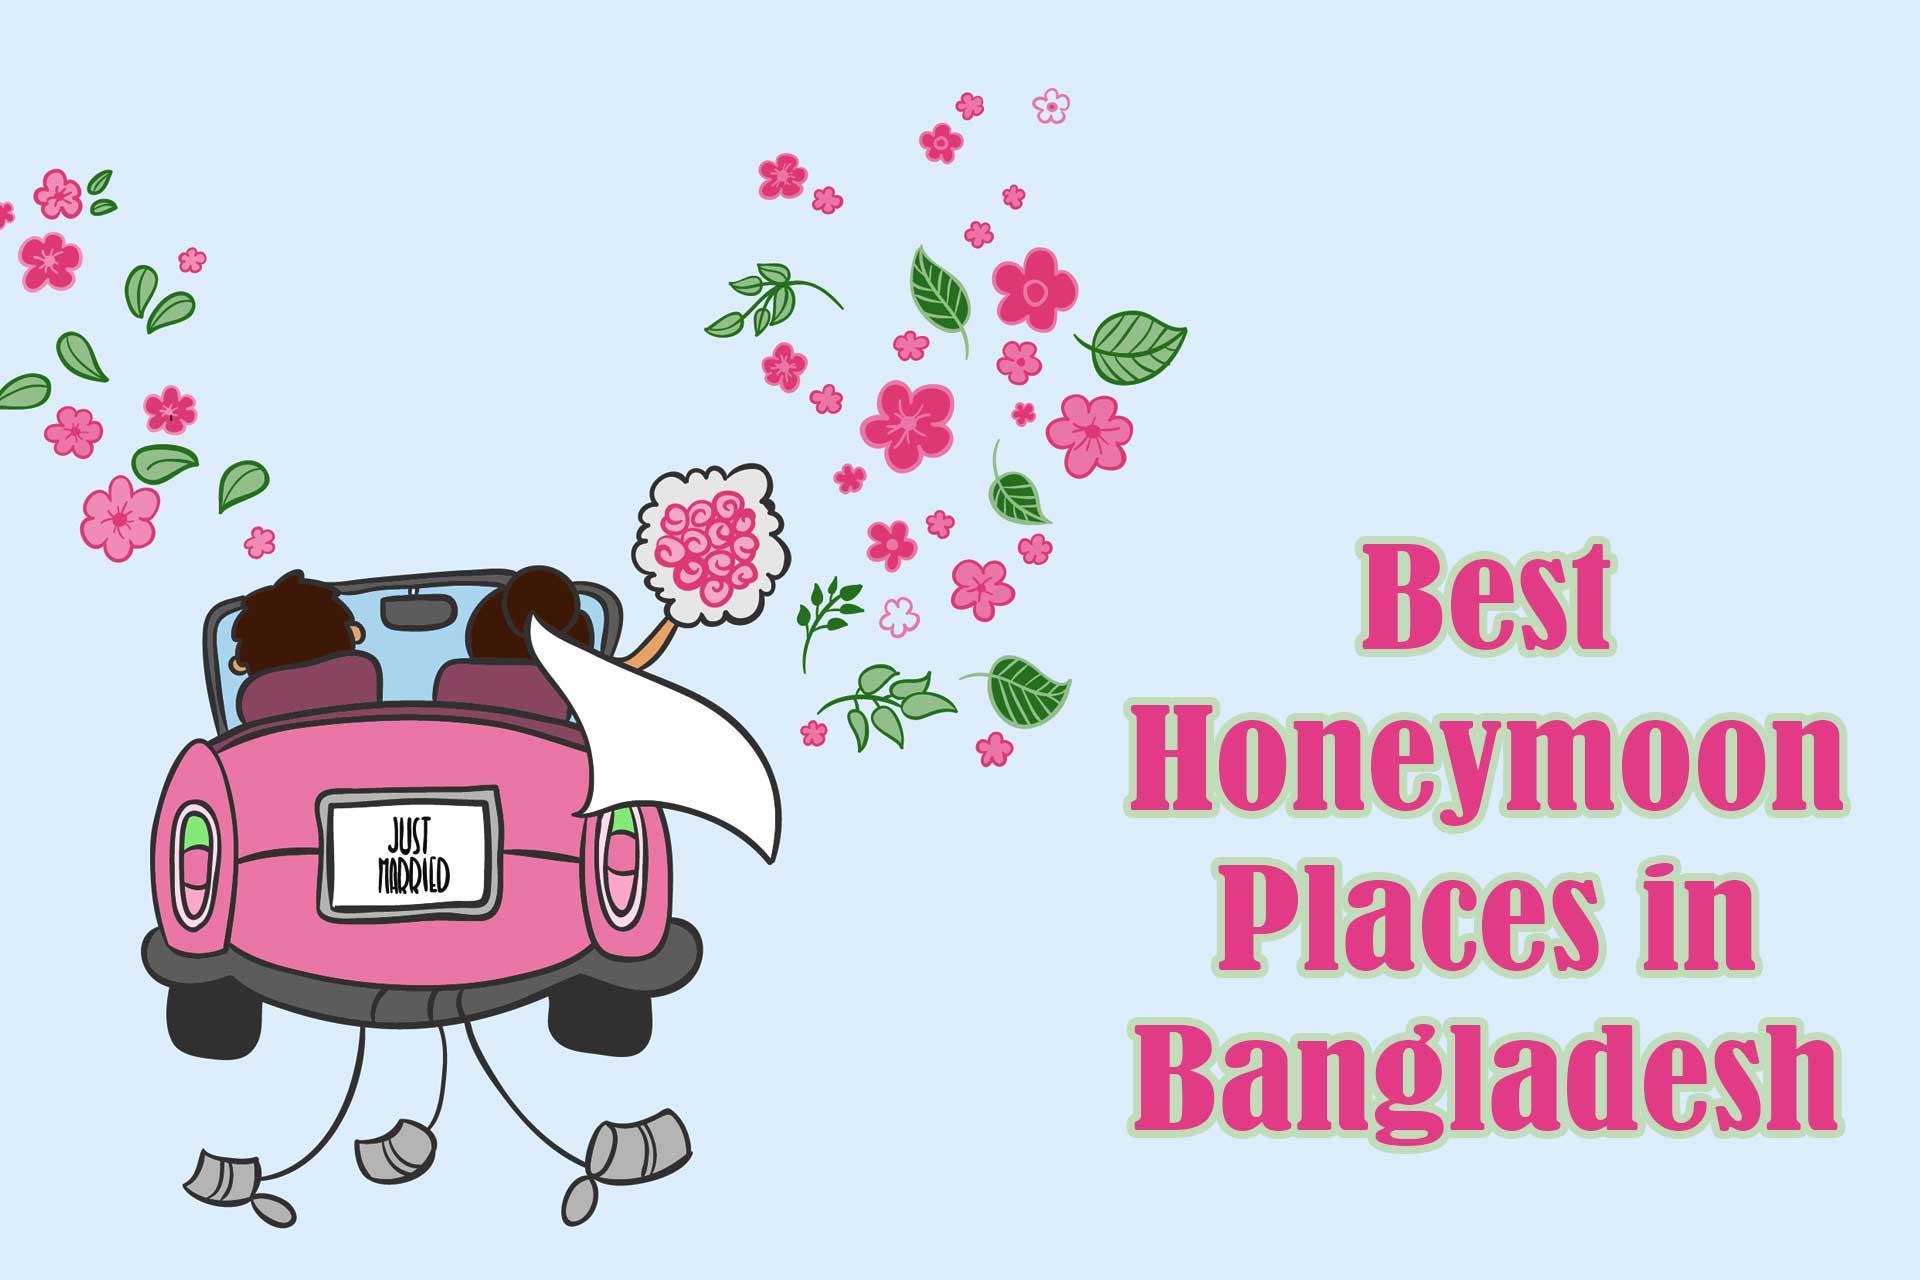 Best Honeymoon Places in Bangladesh